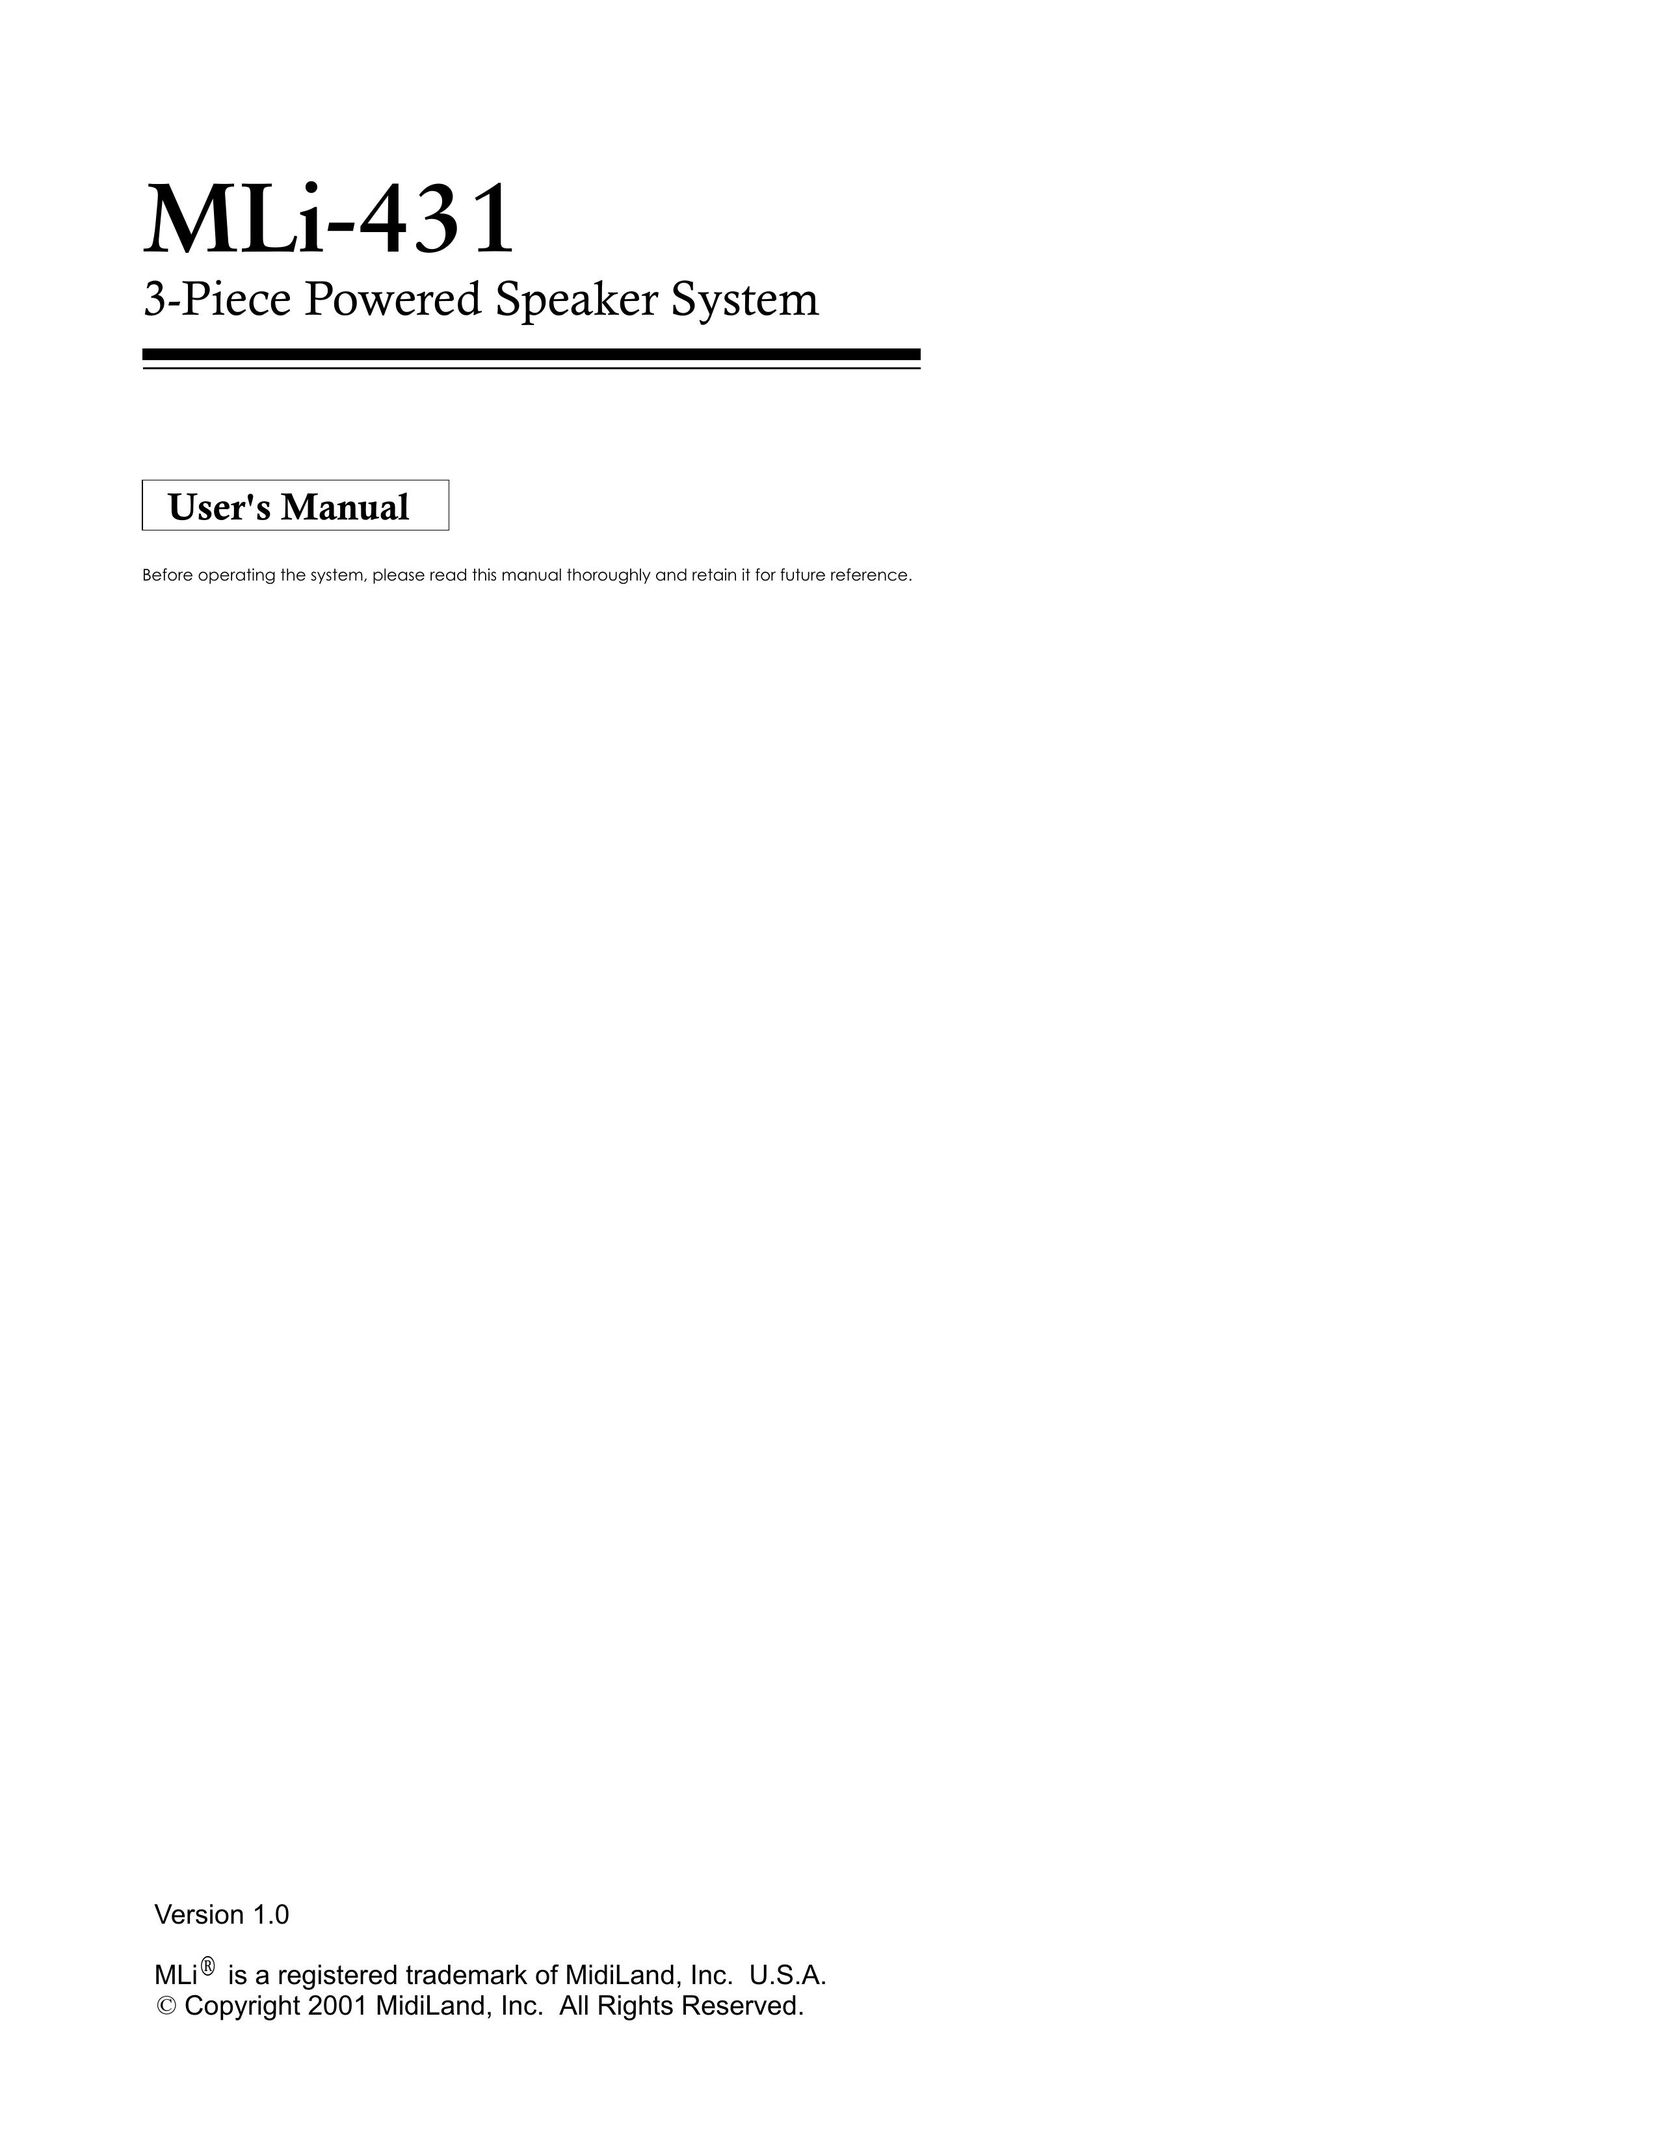 MidiLand MLI-431 Speaker System User Manual